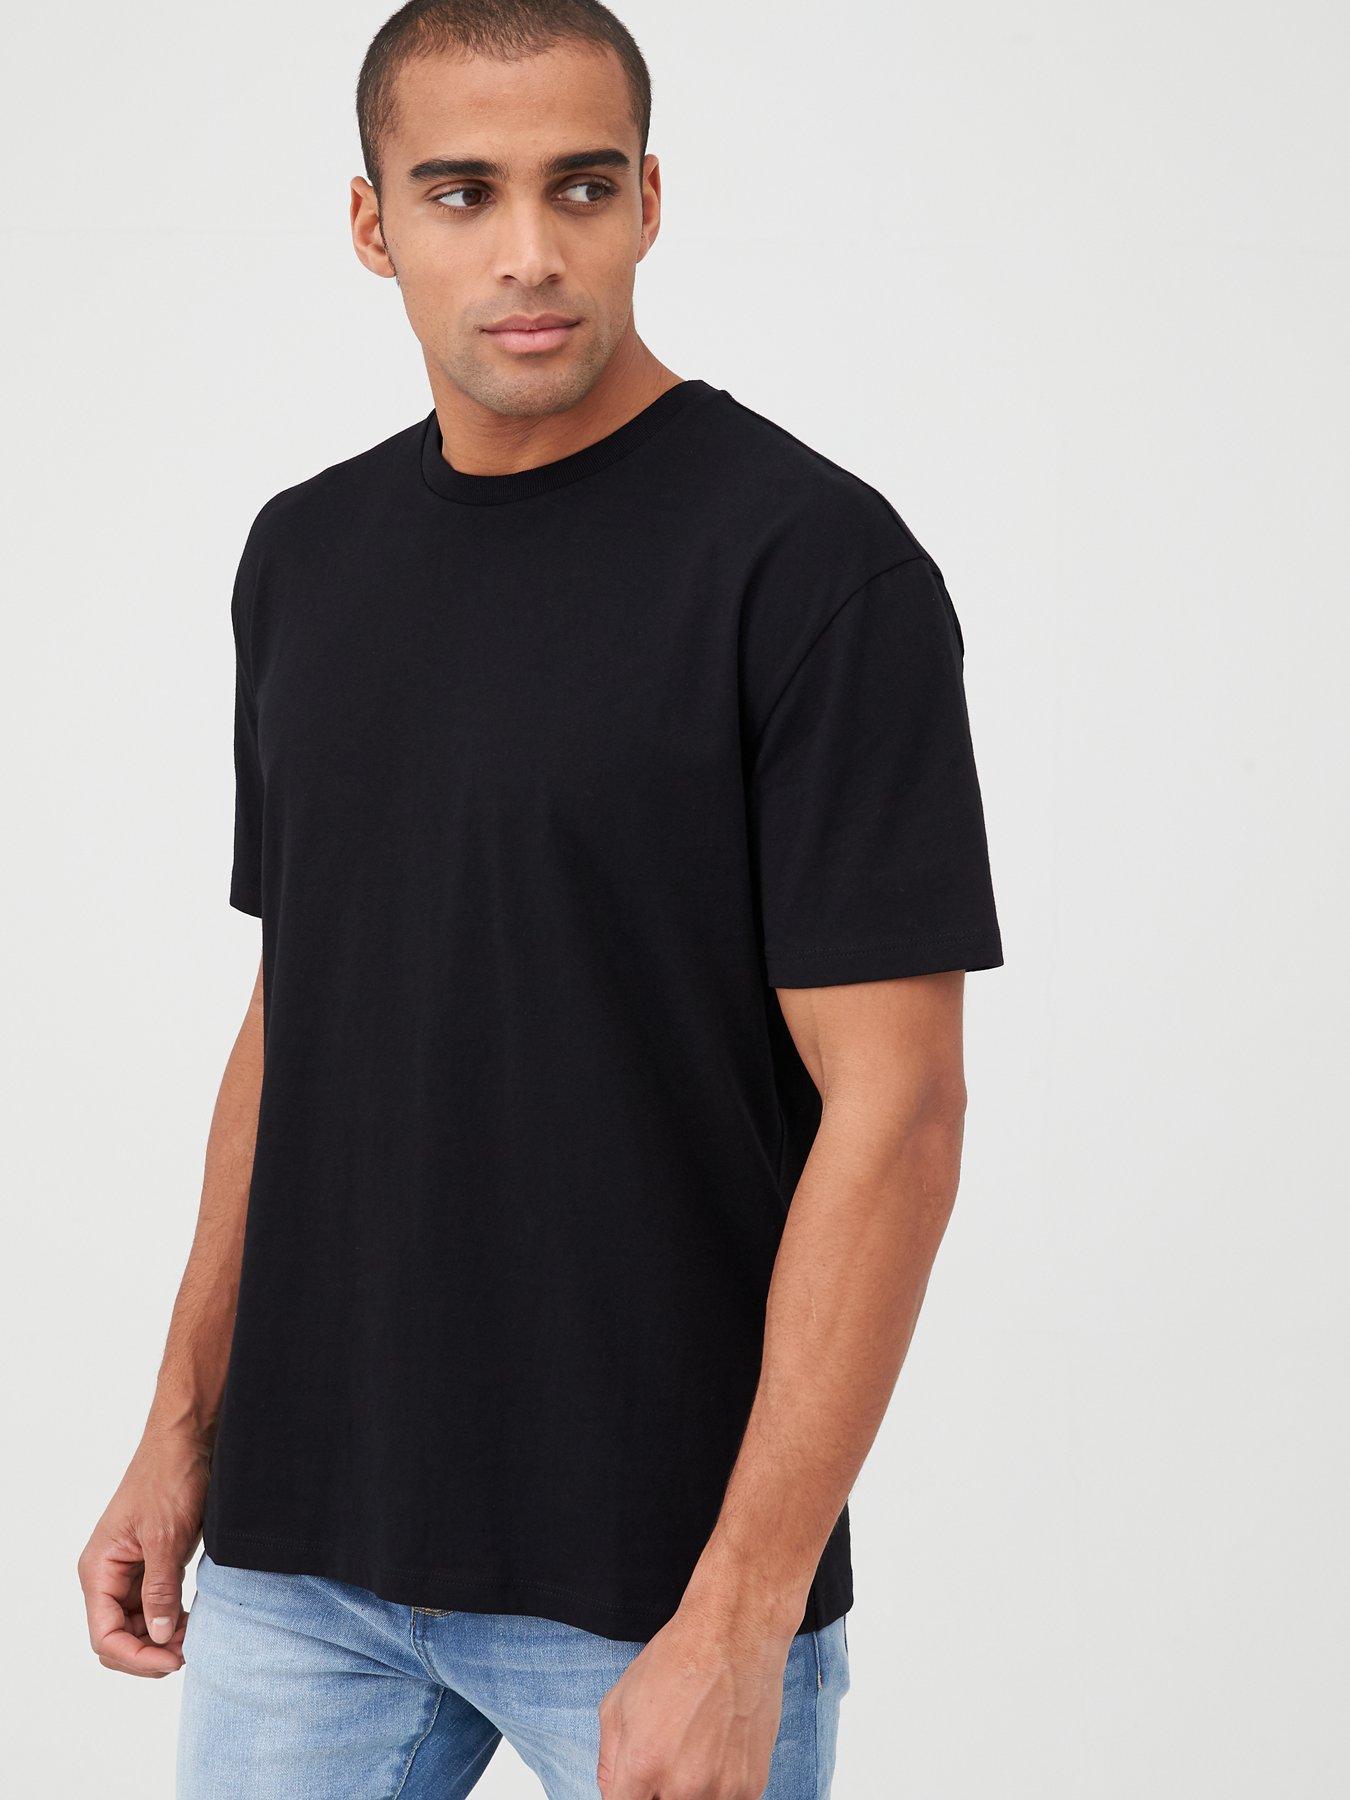 Very Man Oversized T-Shirt - Black | very.co.uk